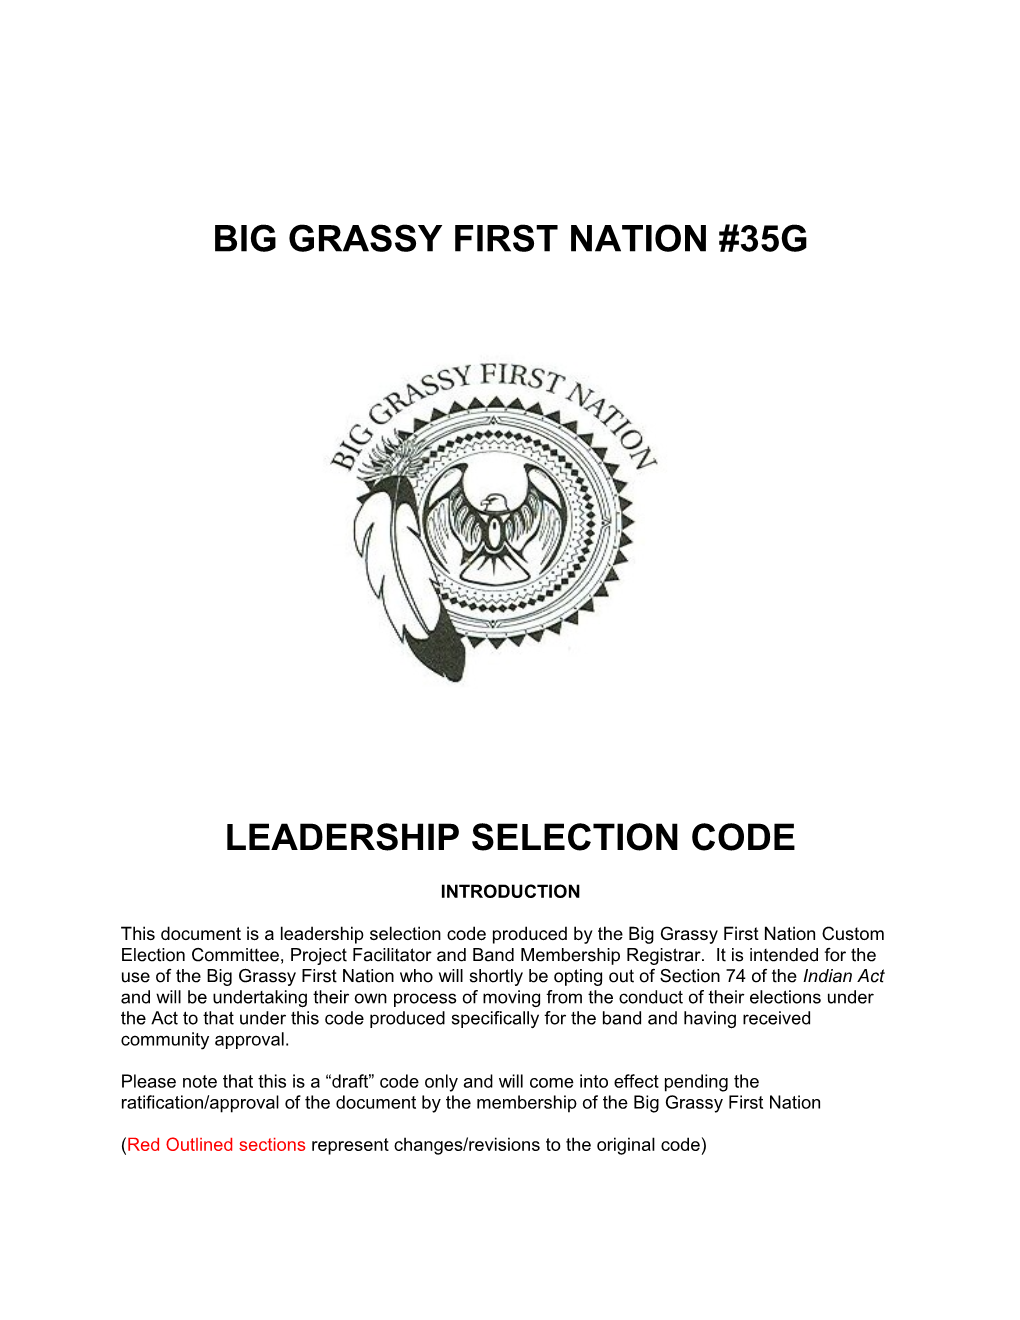 Sample Leadership Selection Code